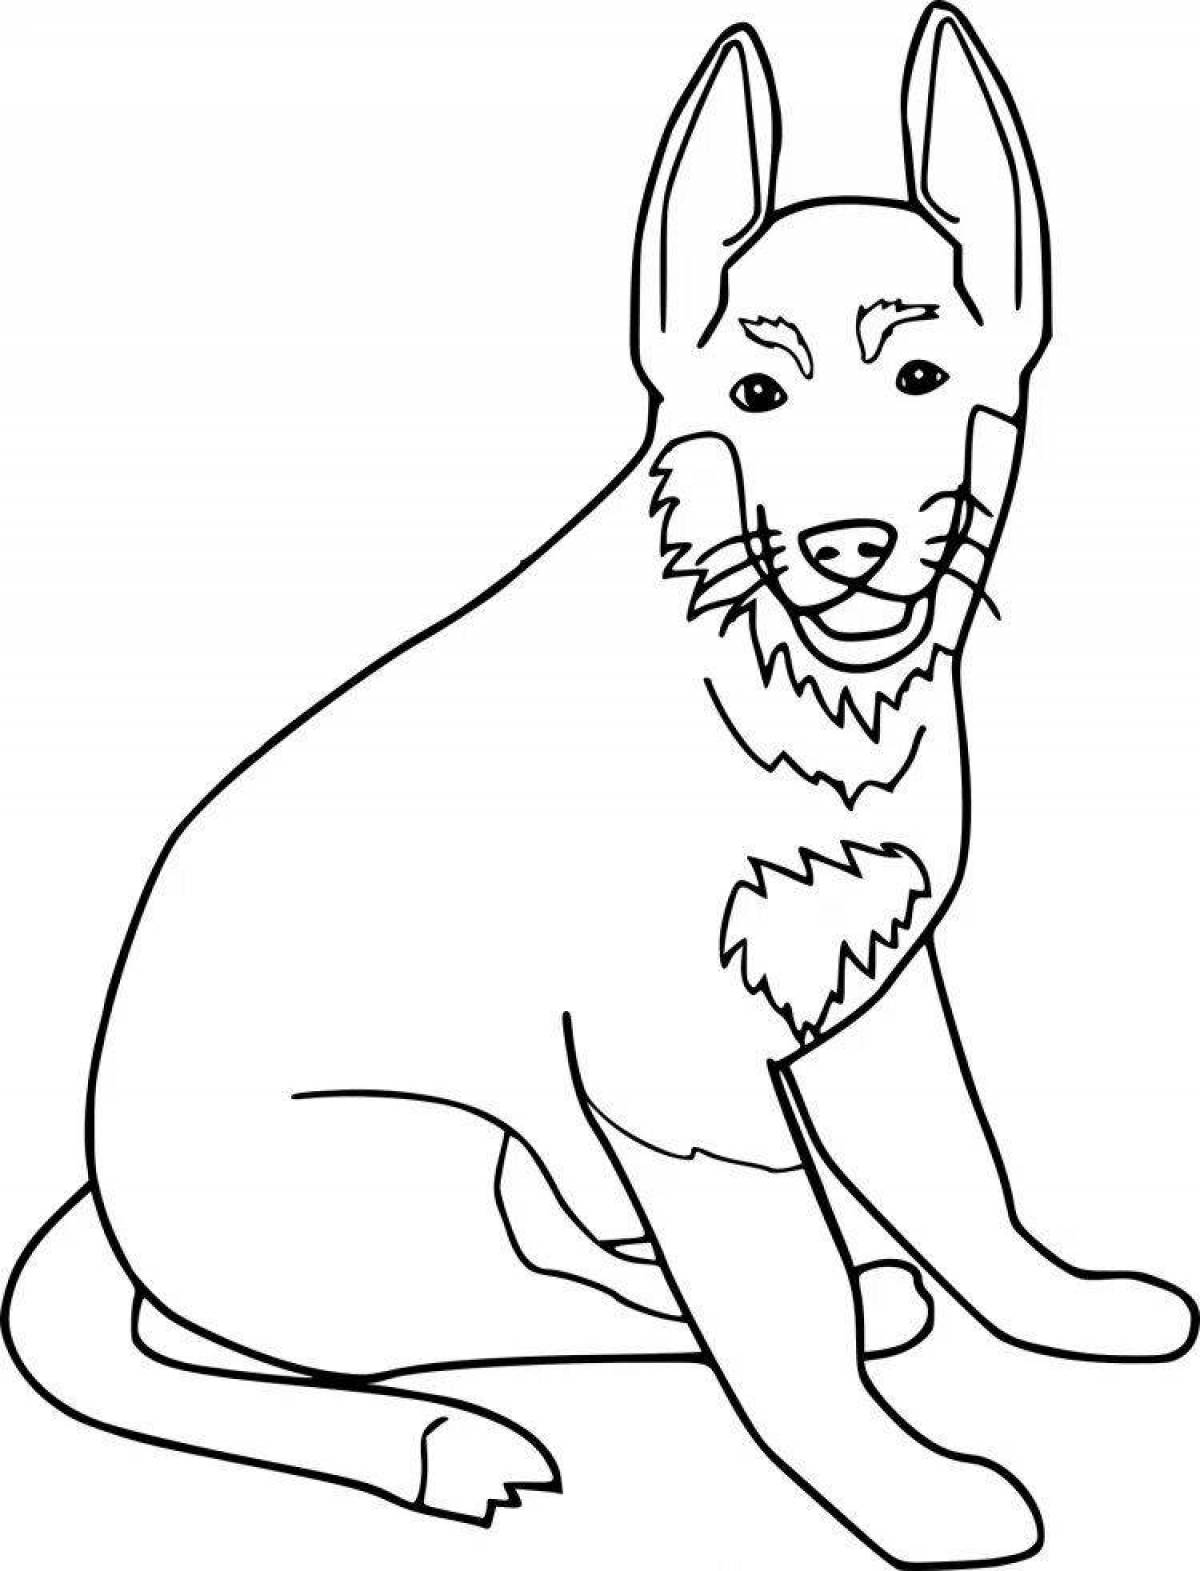 Любознательная раскраска собака овчарка